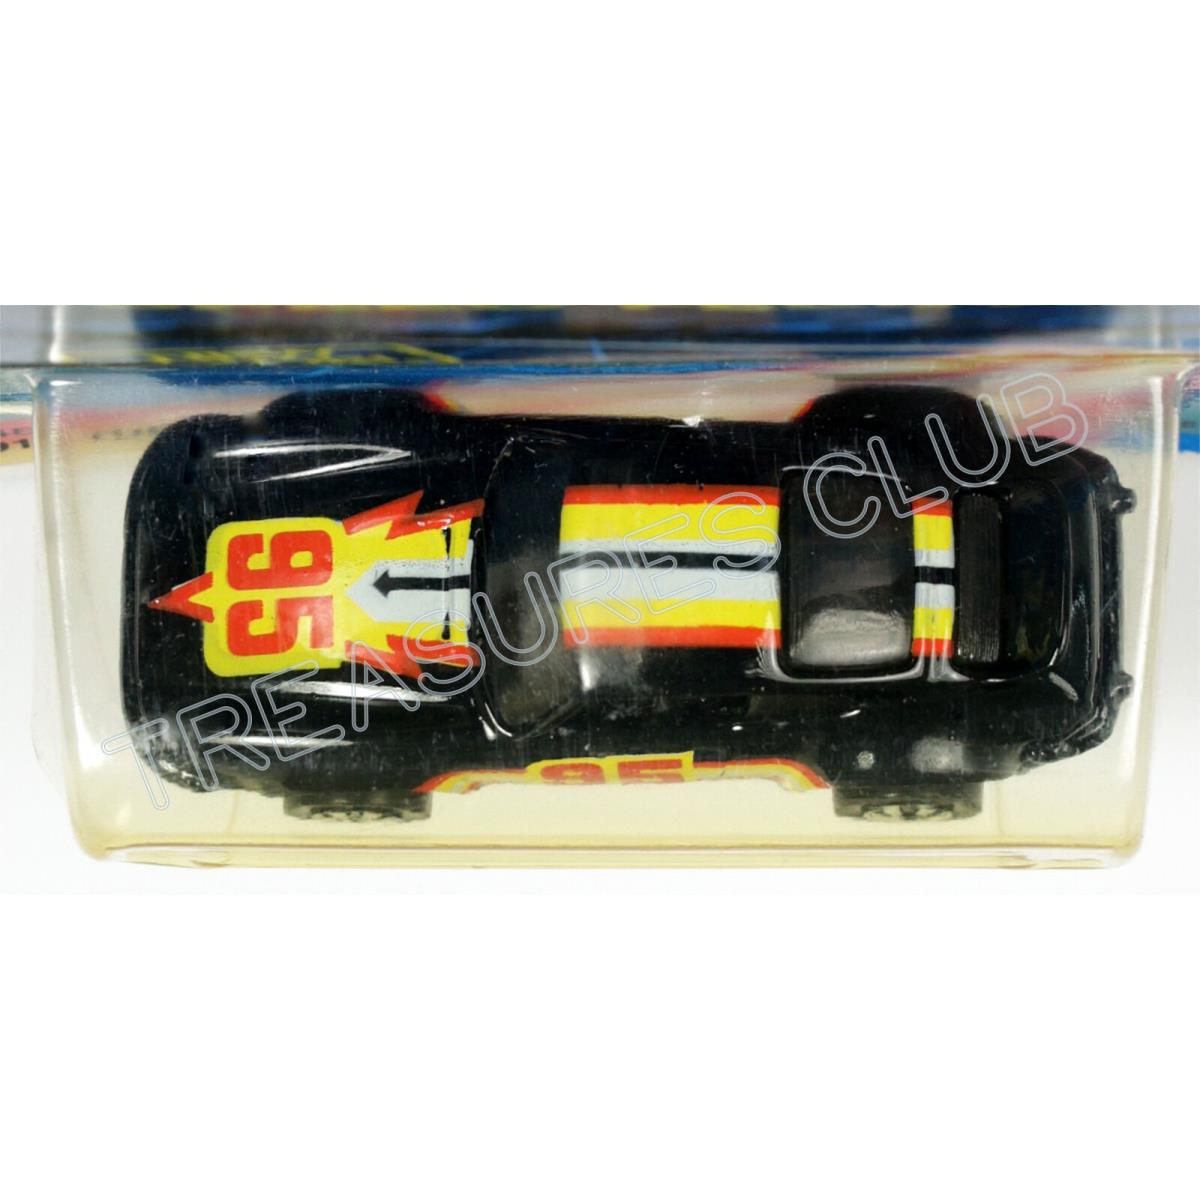 Hot Wheels Porsche P-911 Turbo Speed Fleet Series 7648 Nrfp 1988 Black 1:64